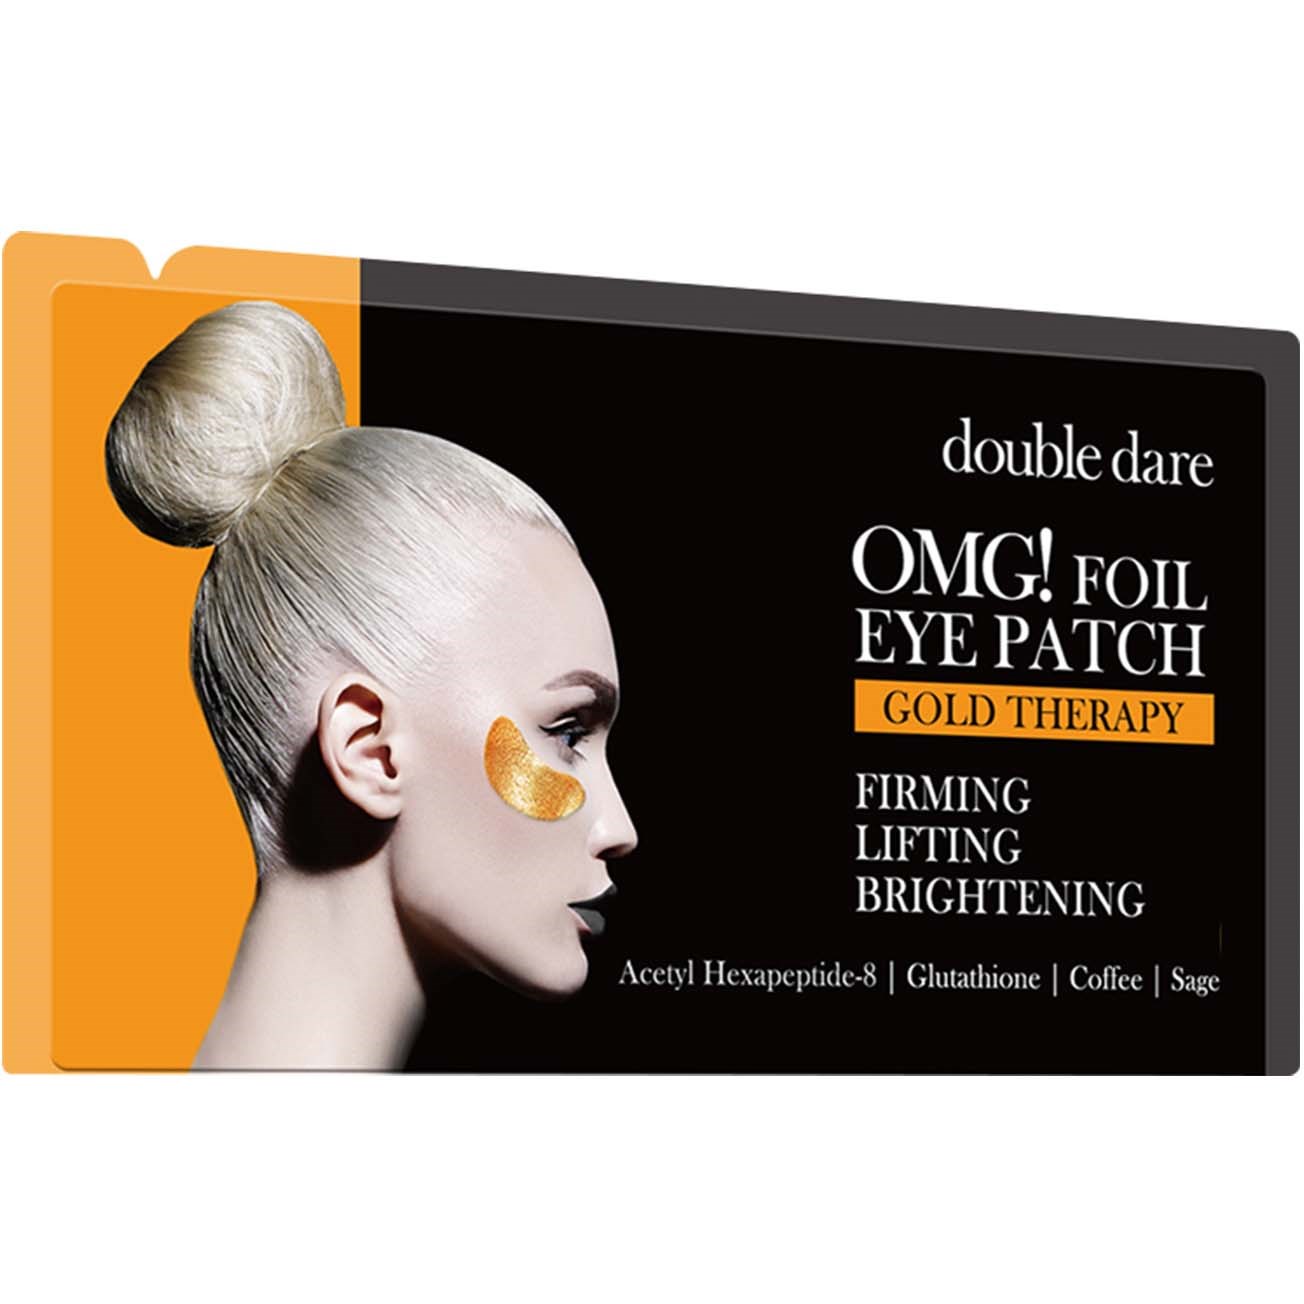 Bilde av Omg! Double Dare Foil Eye Patch Gold Therapy